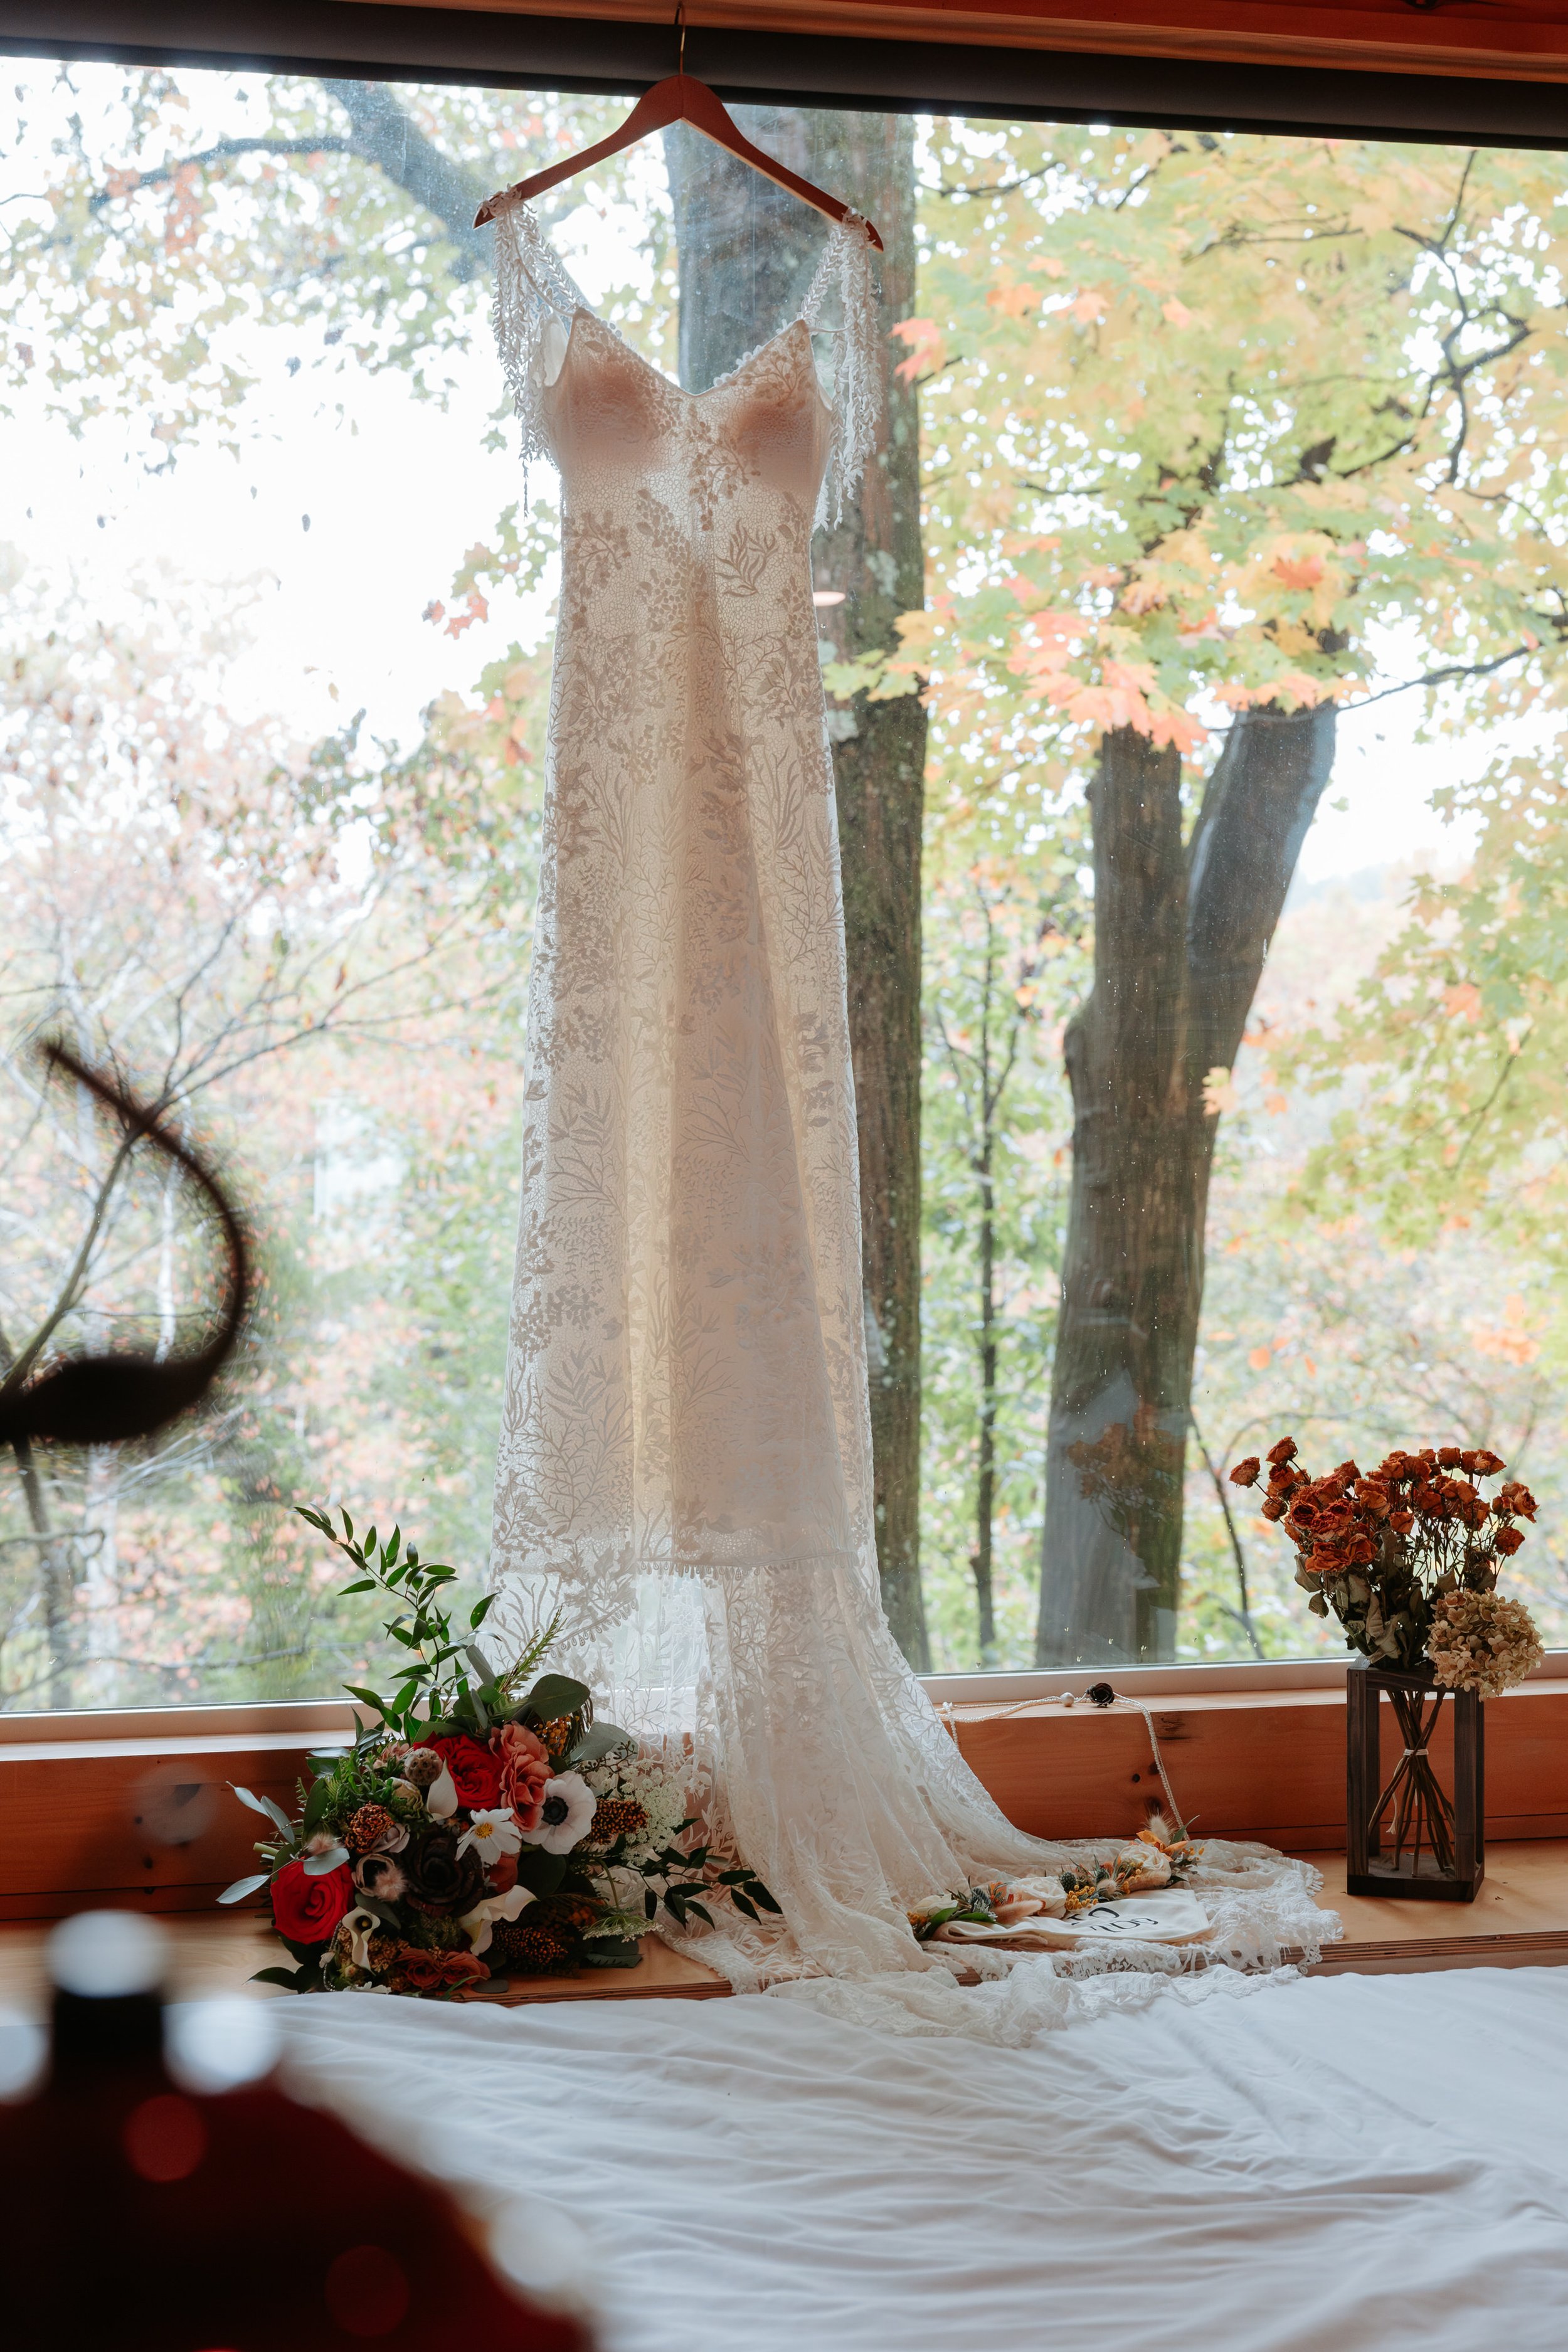 Wedding dress hanging in a window.